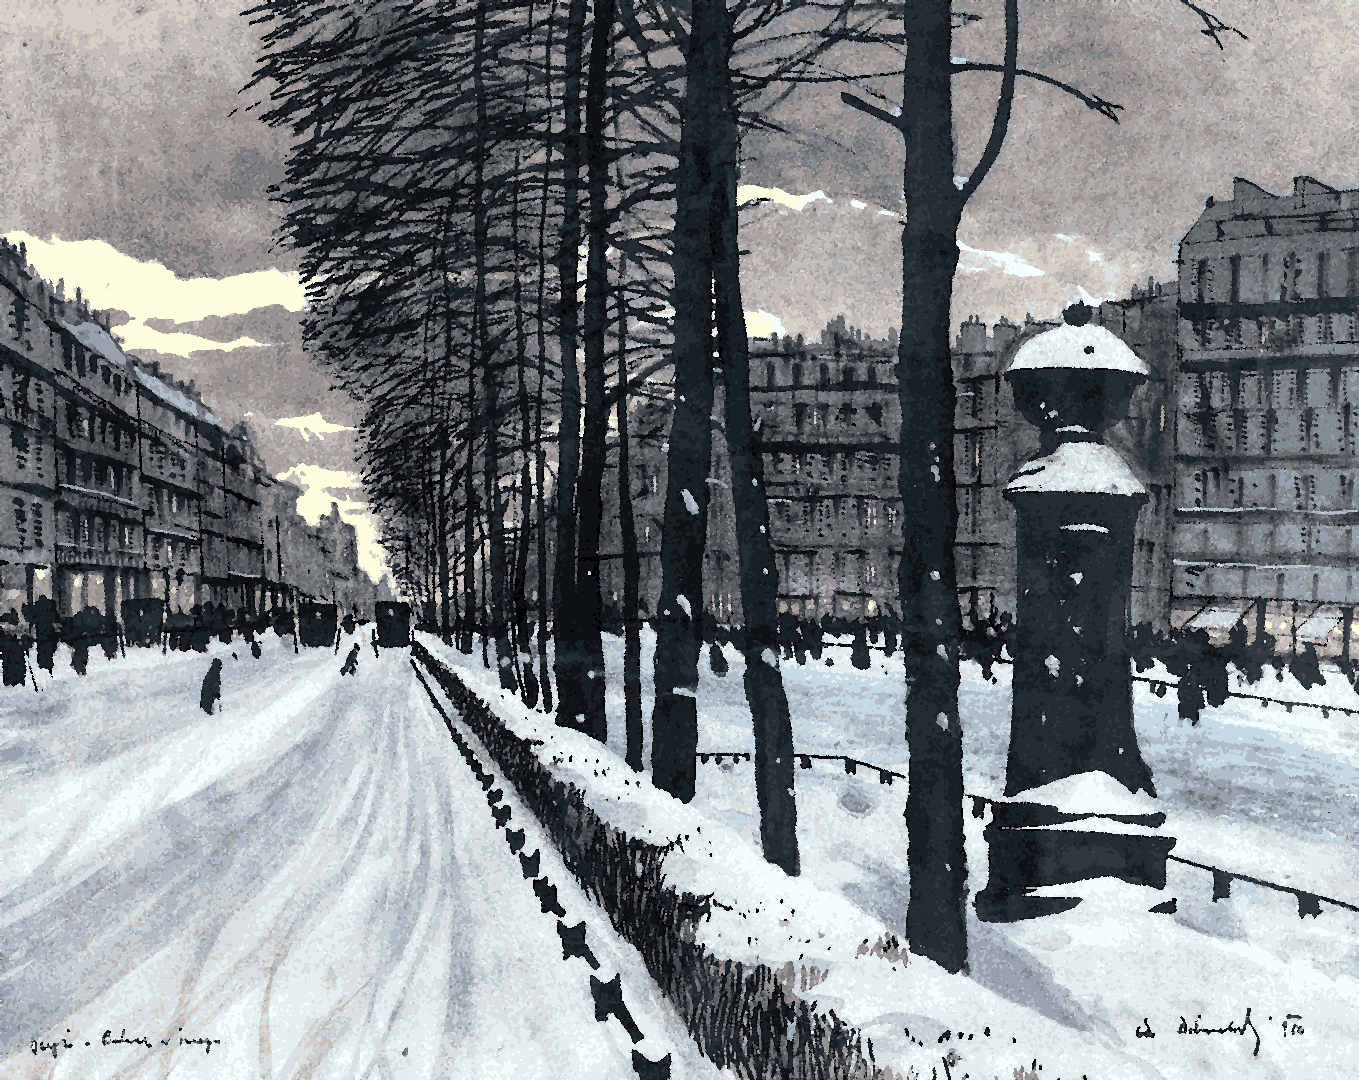 A Paris Boulevard in the Snow by Odo Dobrowolski - Van-Go Paint-By-Number Kit